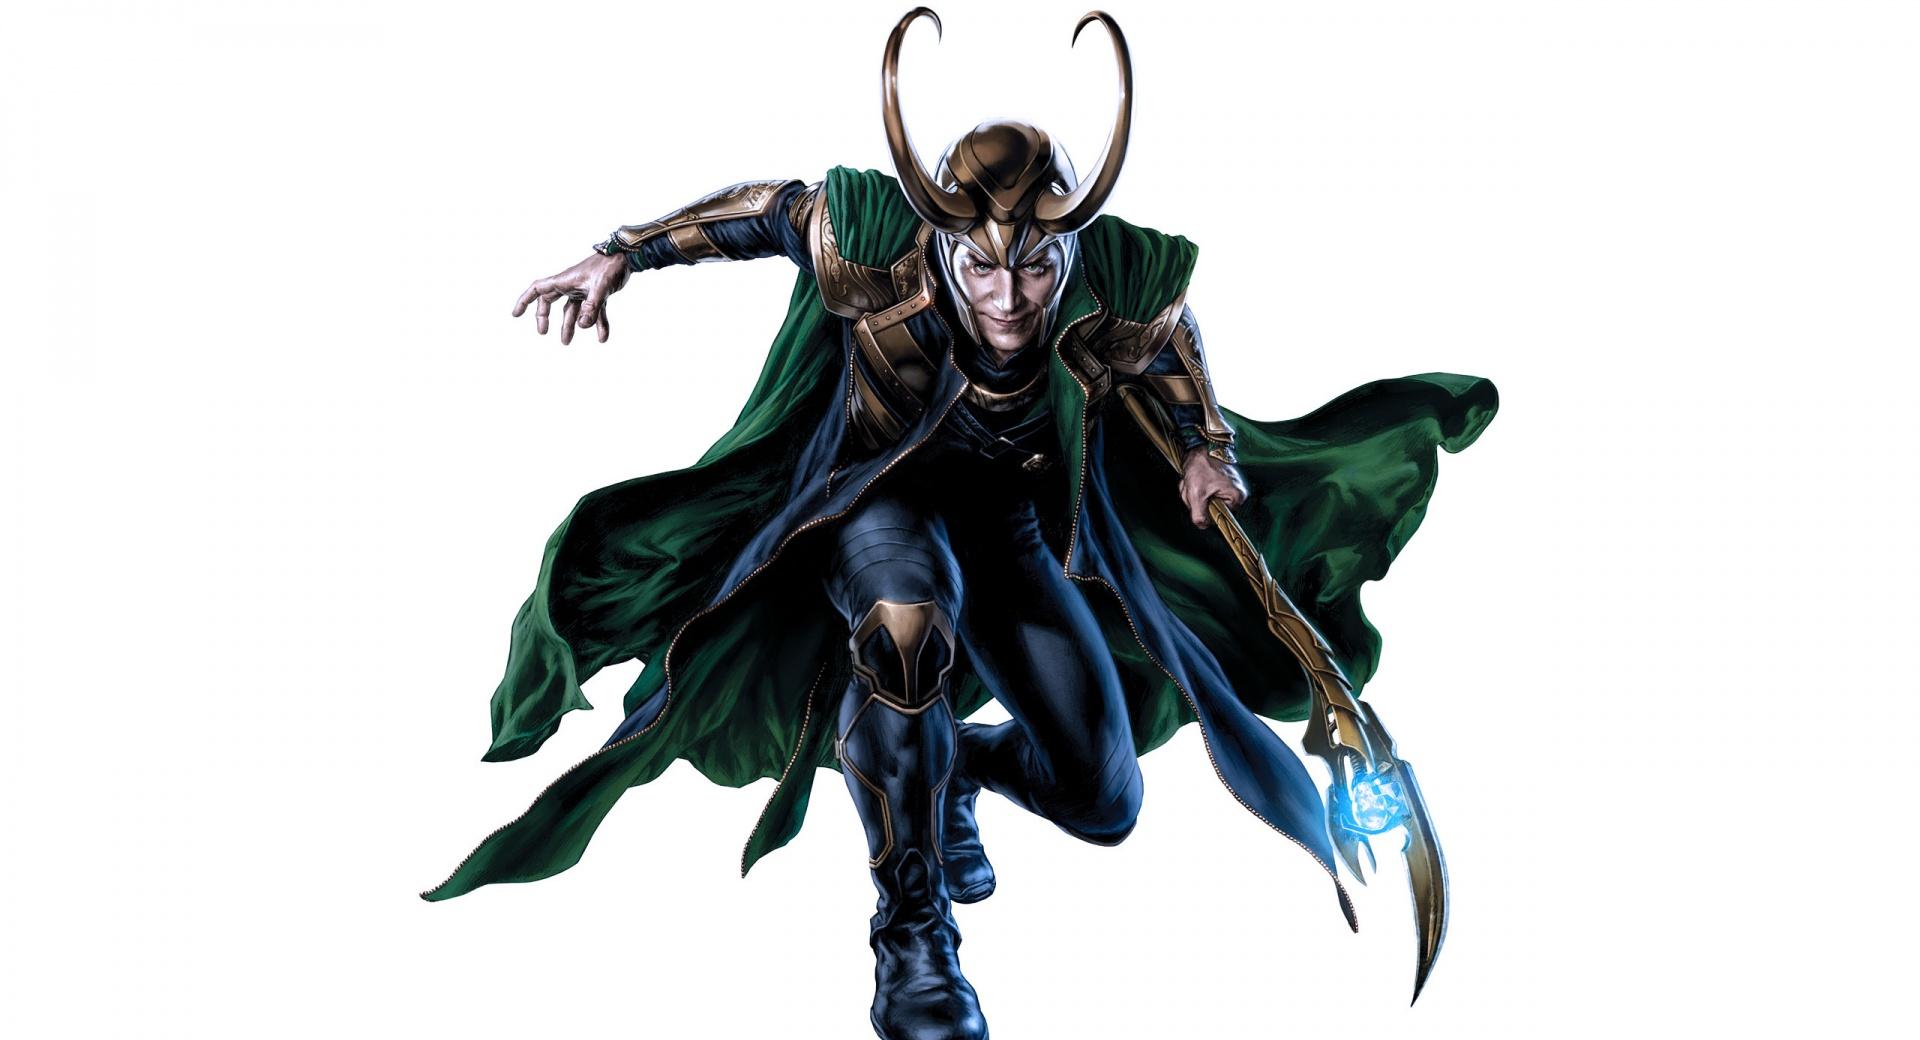 Loki Laufeyson - The Avengers at 1024 x 1024 iPad size wallpapers HD quality